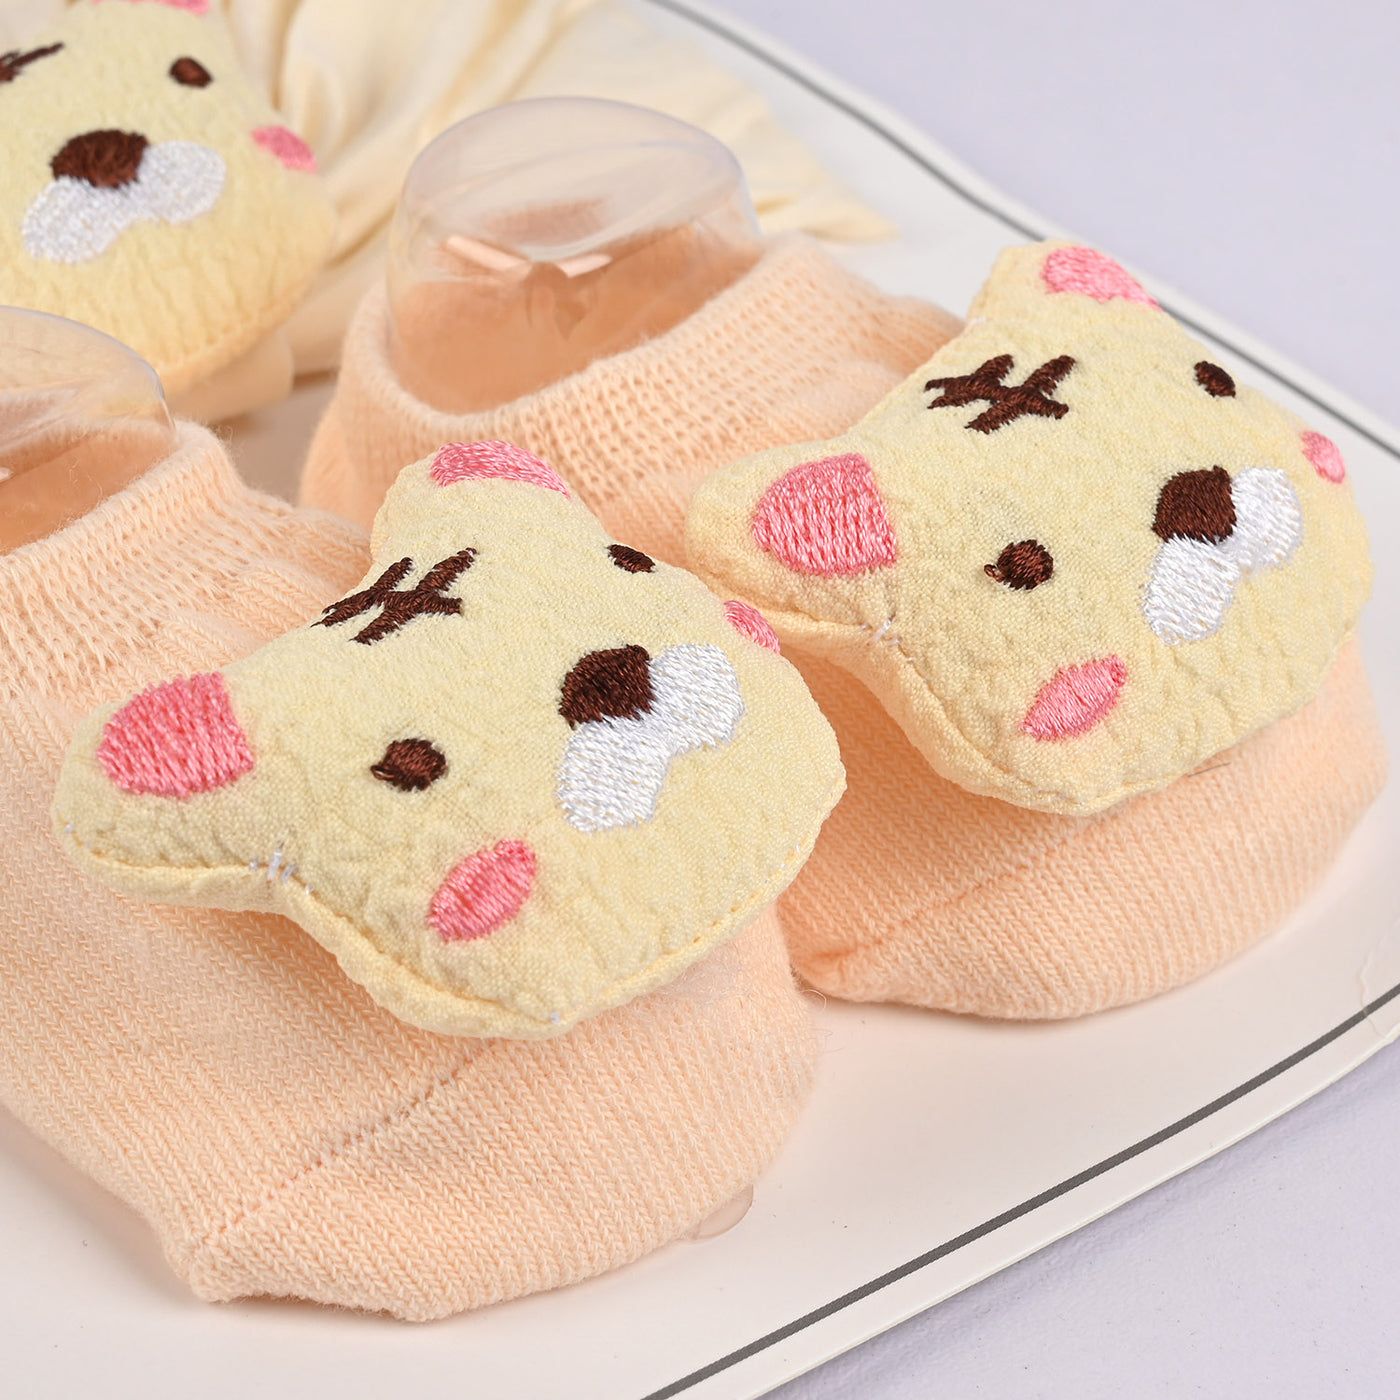 Infant Baby Care 2PCs Set Cap With Socks | Cream